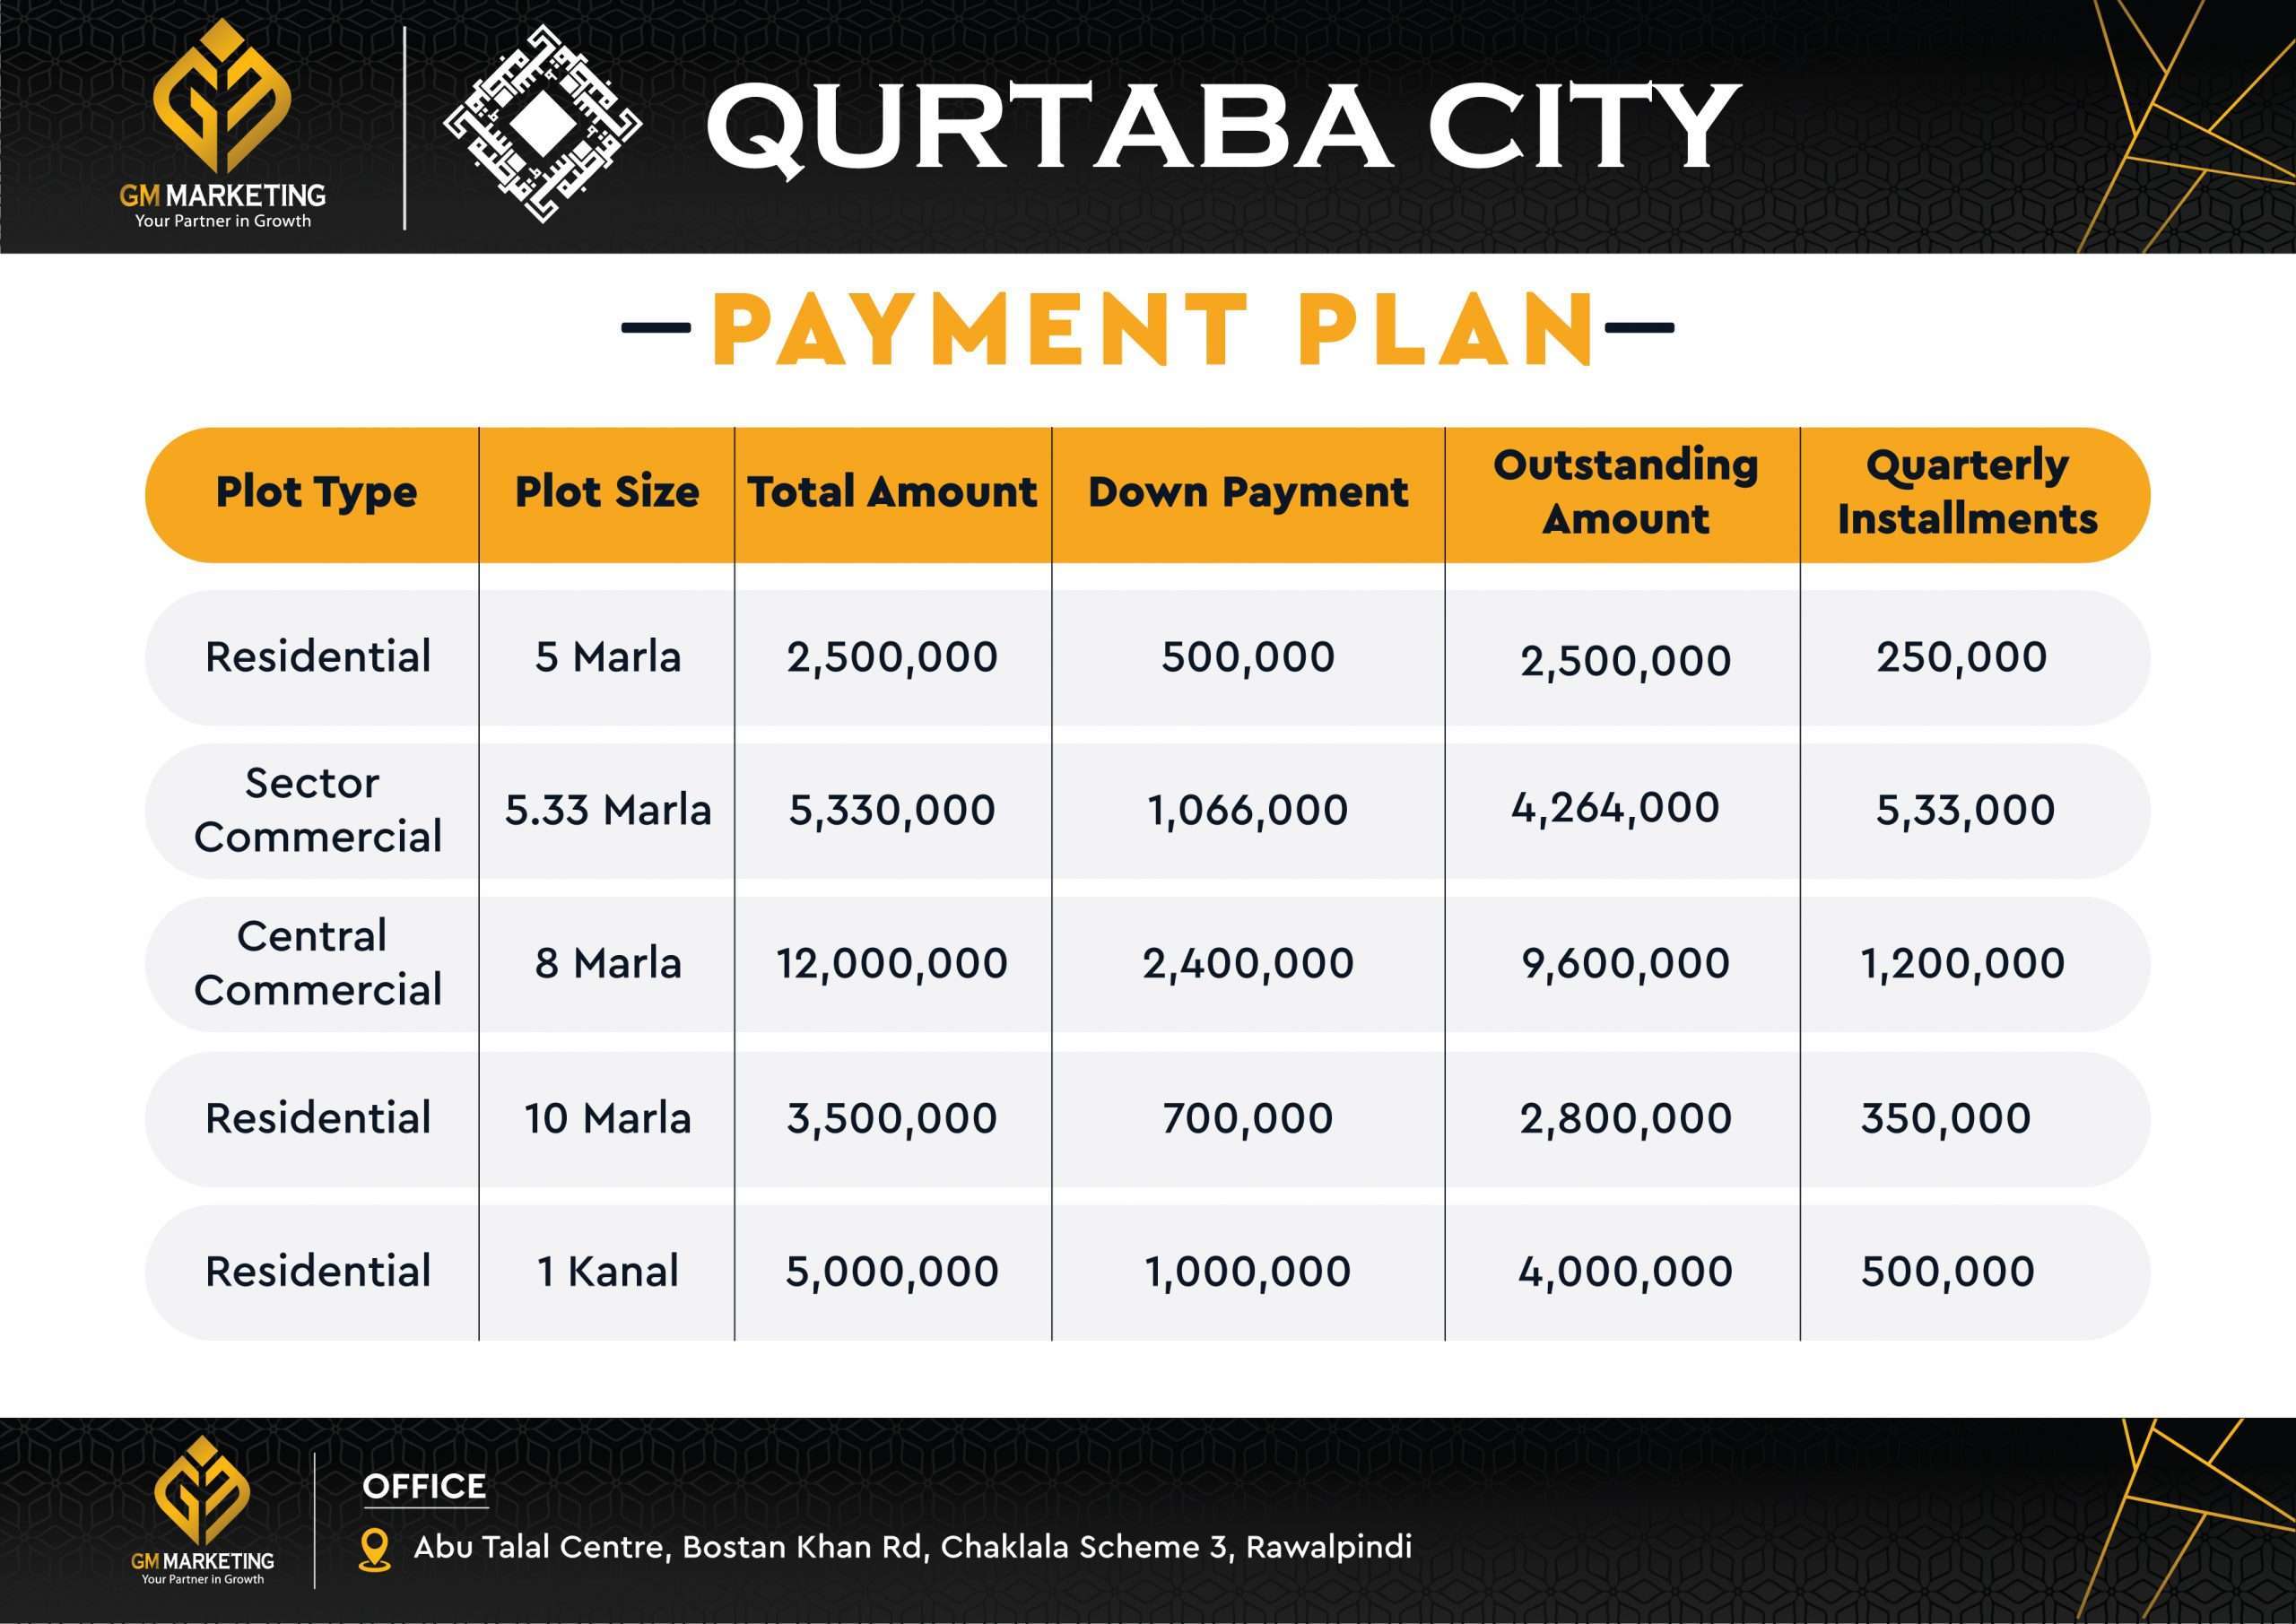 qurtaba city islamabad payment plan GM Marketing